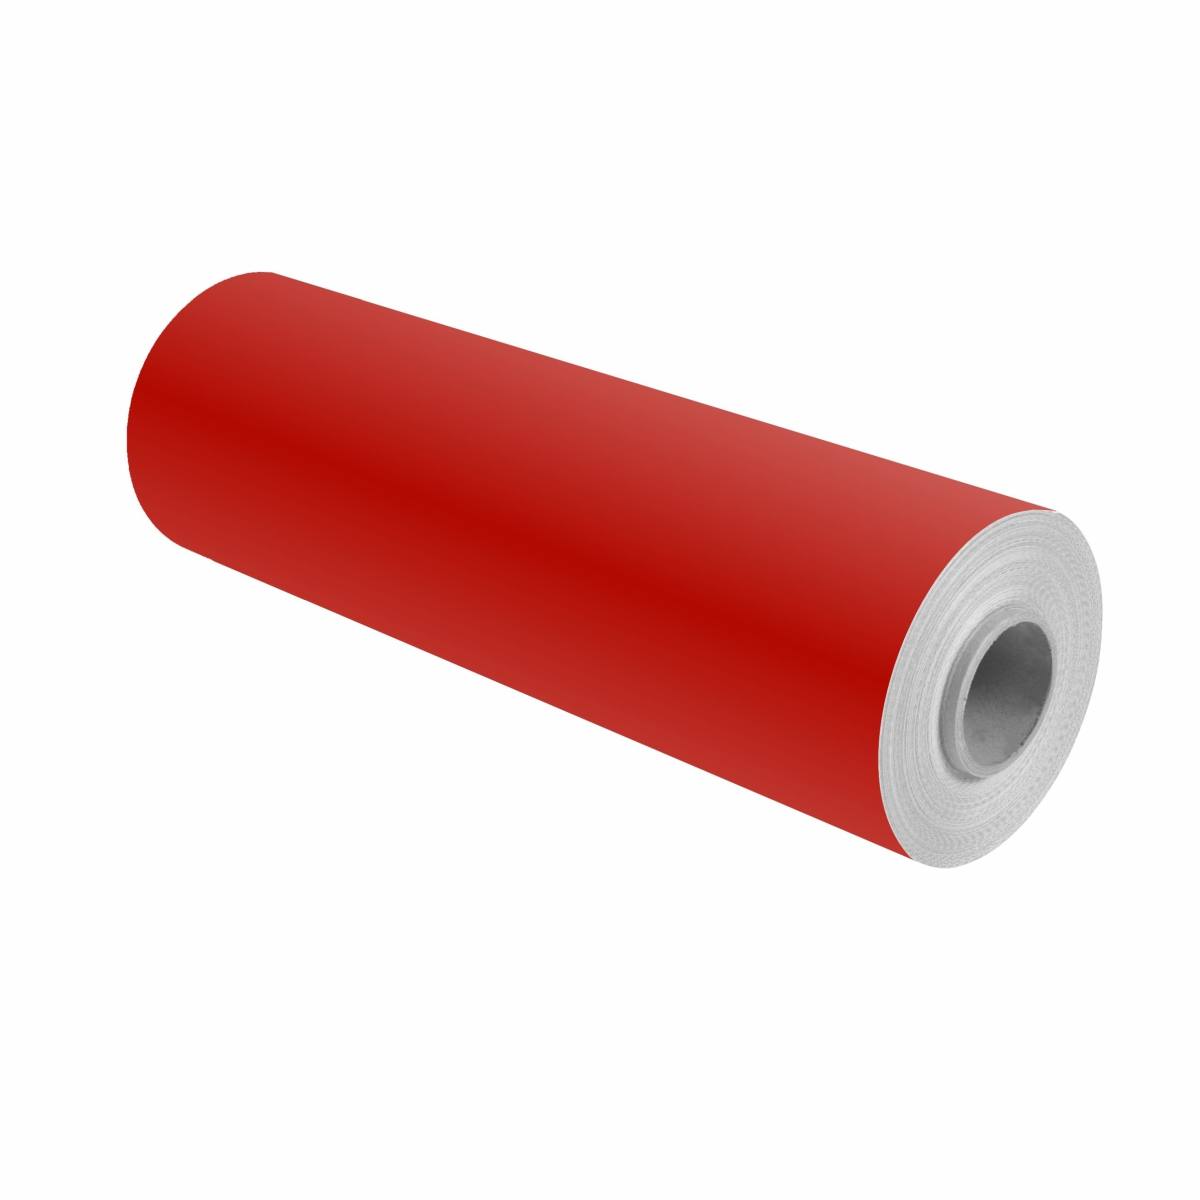 3M Scotchcal pellicola colorata 100-13 rosso pomodoro 1,22 m x 50 m